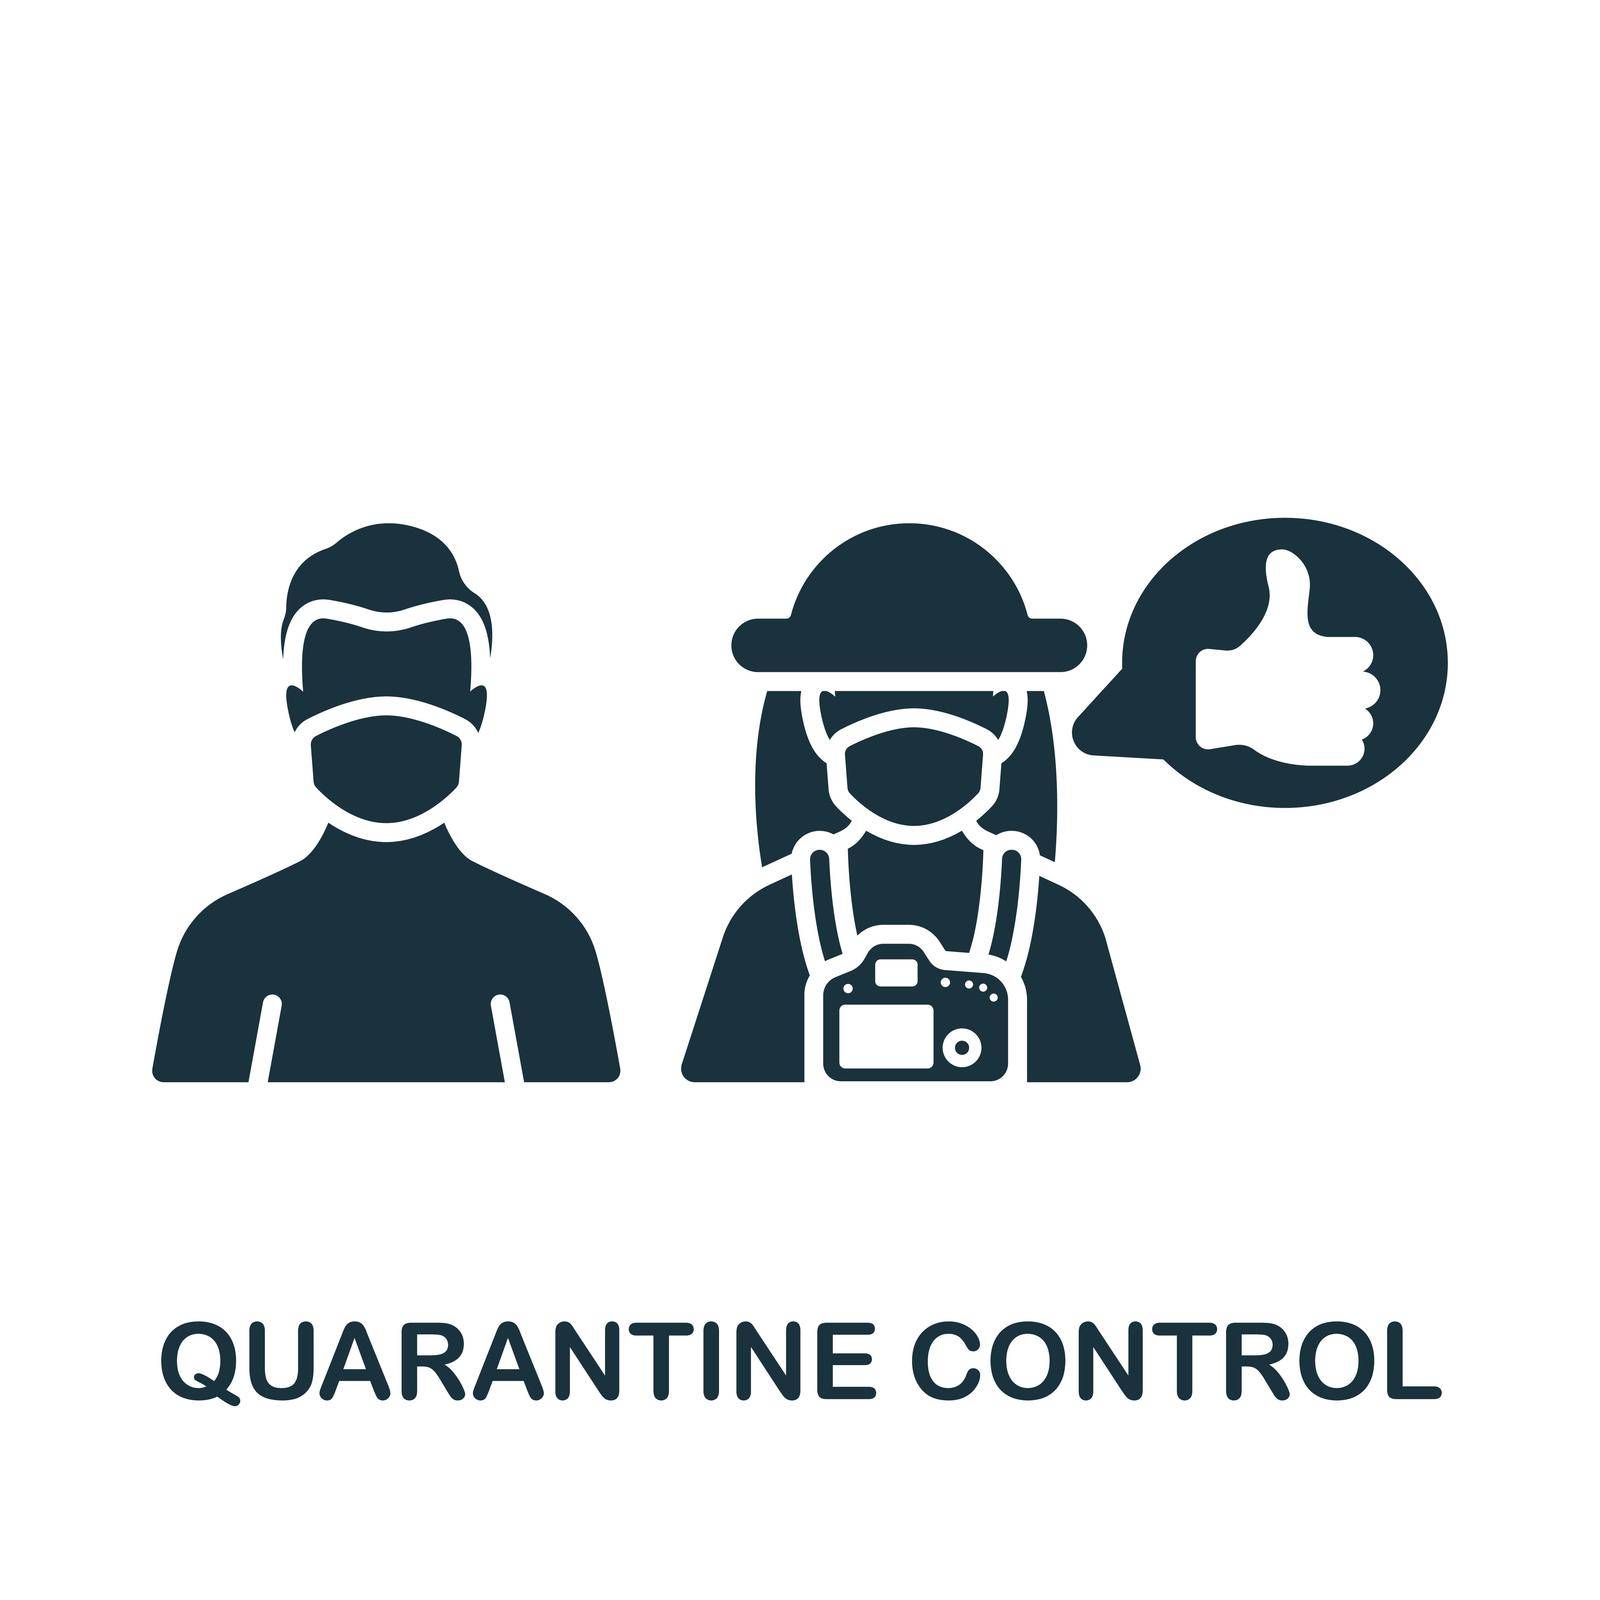 Quarantine Control icon. Monochrome simple Quarantine icon for templates, web design and infographics by simakovavector